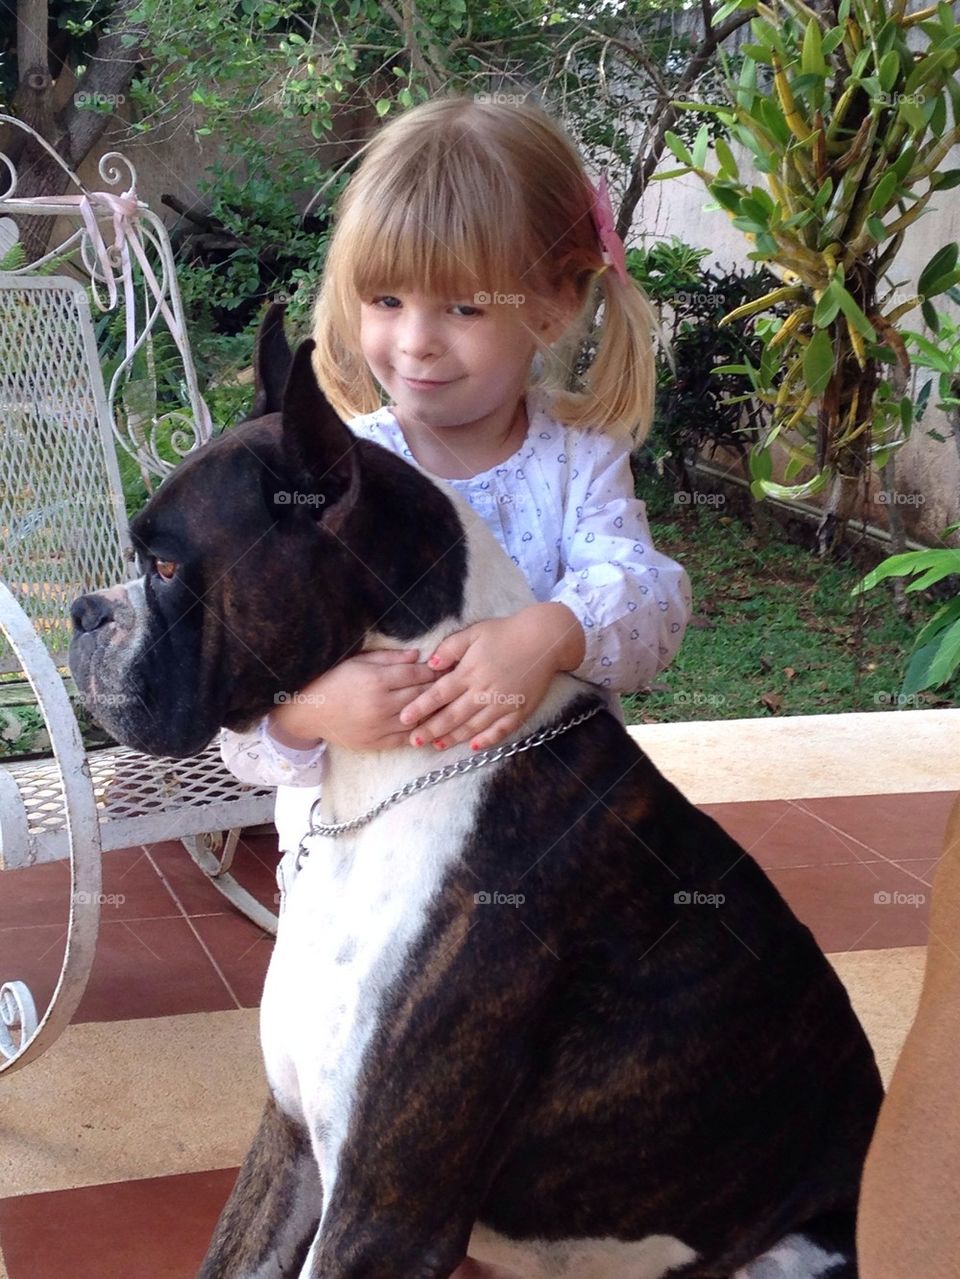 Child hugging dog